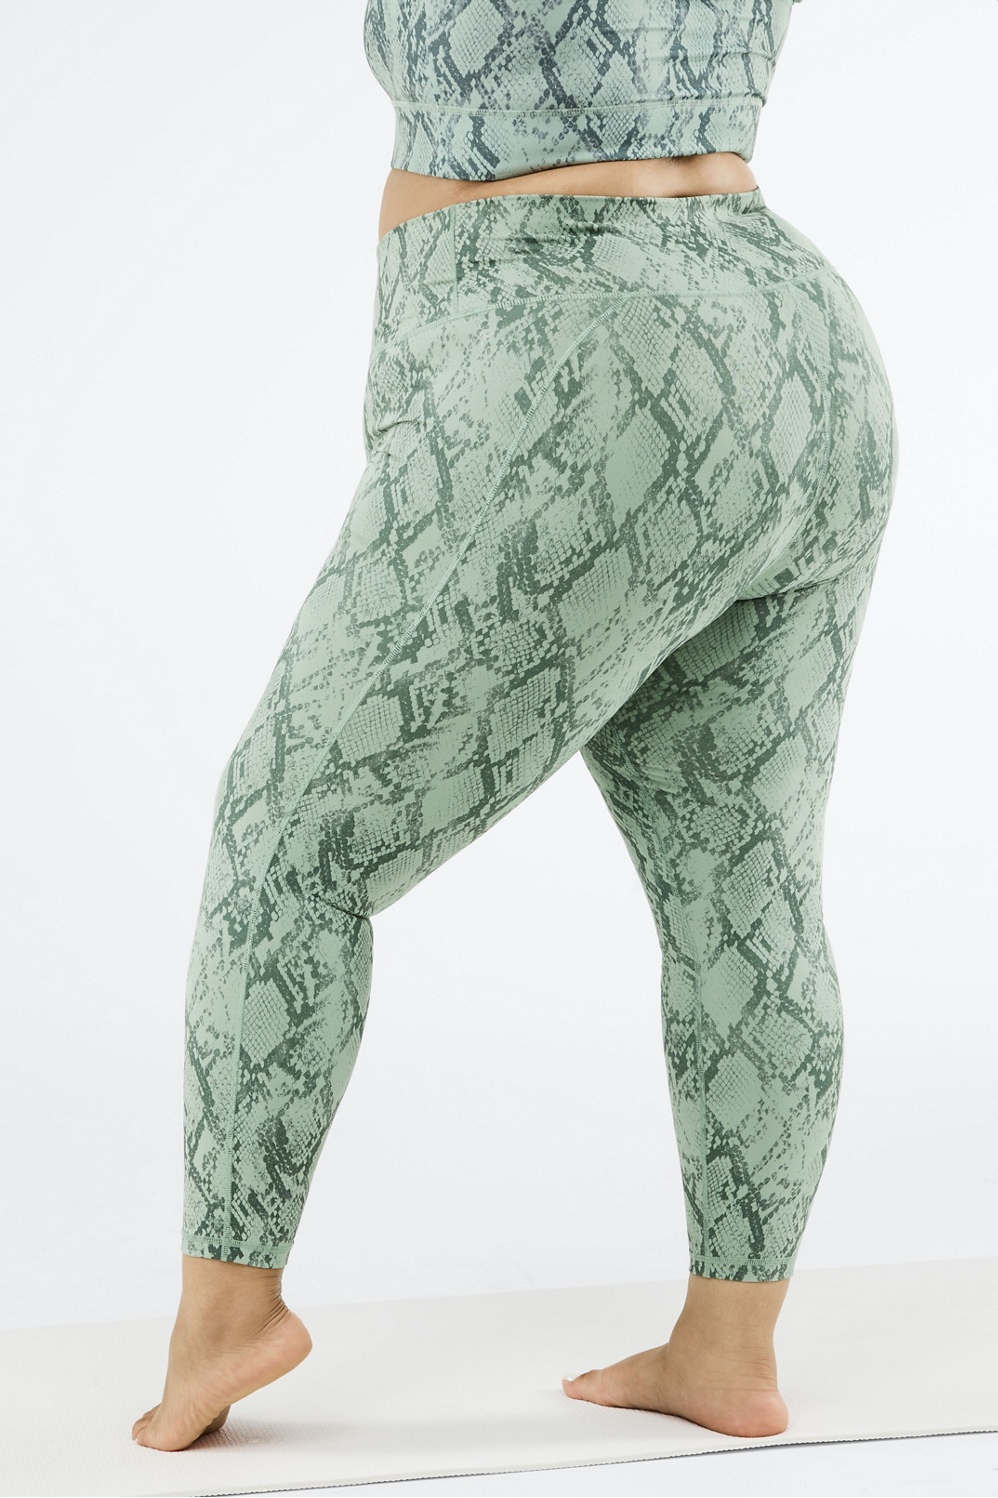 Fabletics leggings snake print  Fabletics leggings, Clothes design, Pants  for women